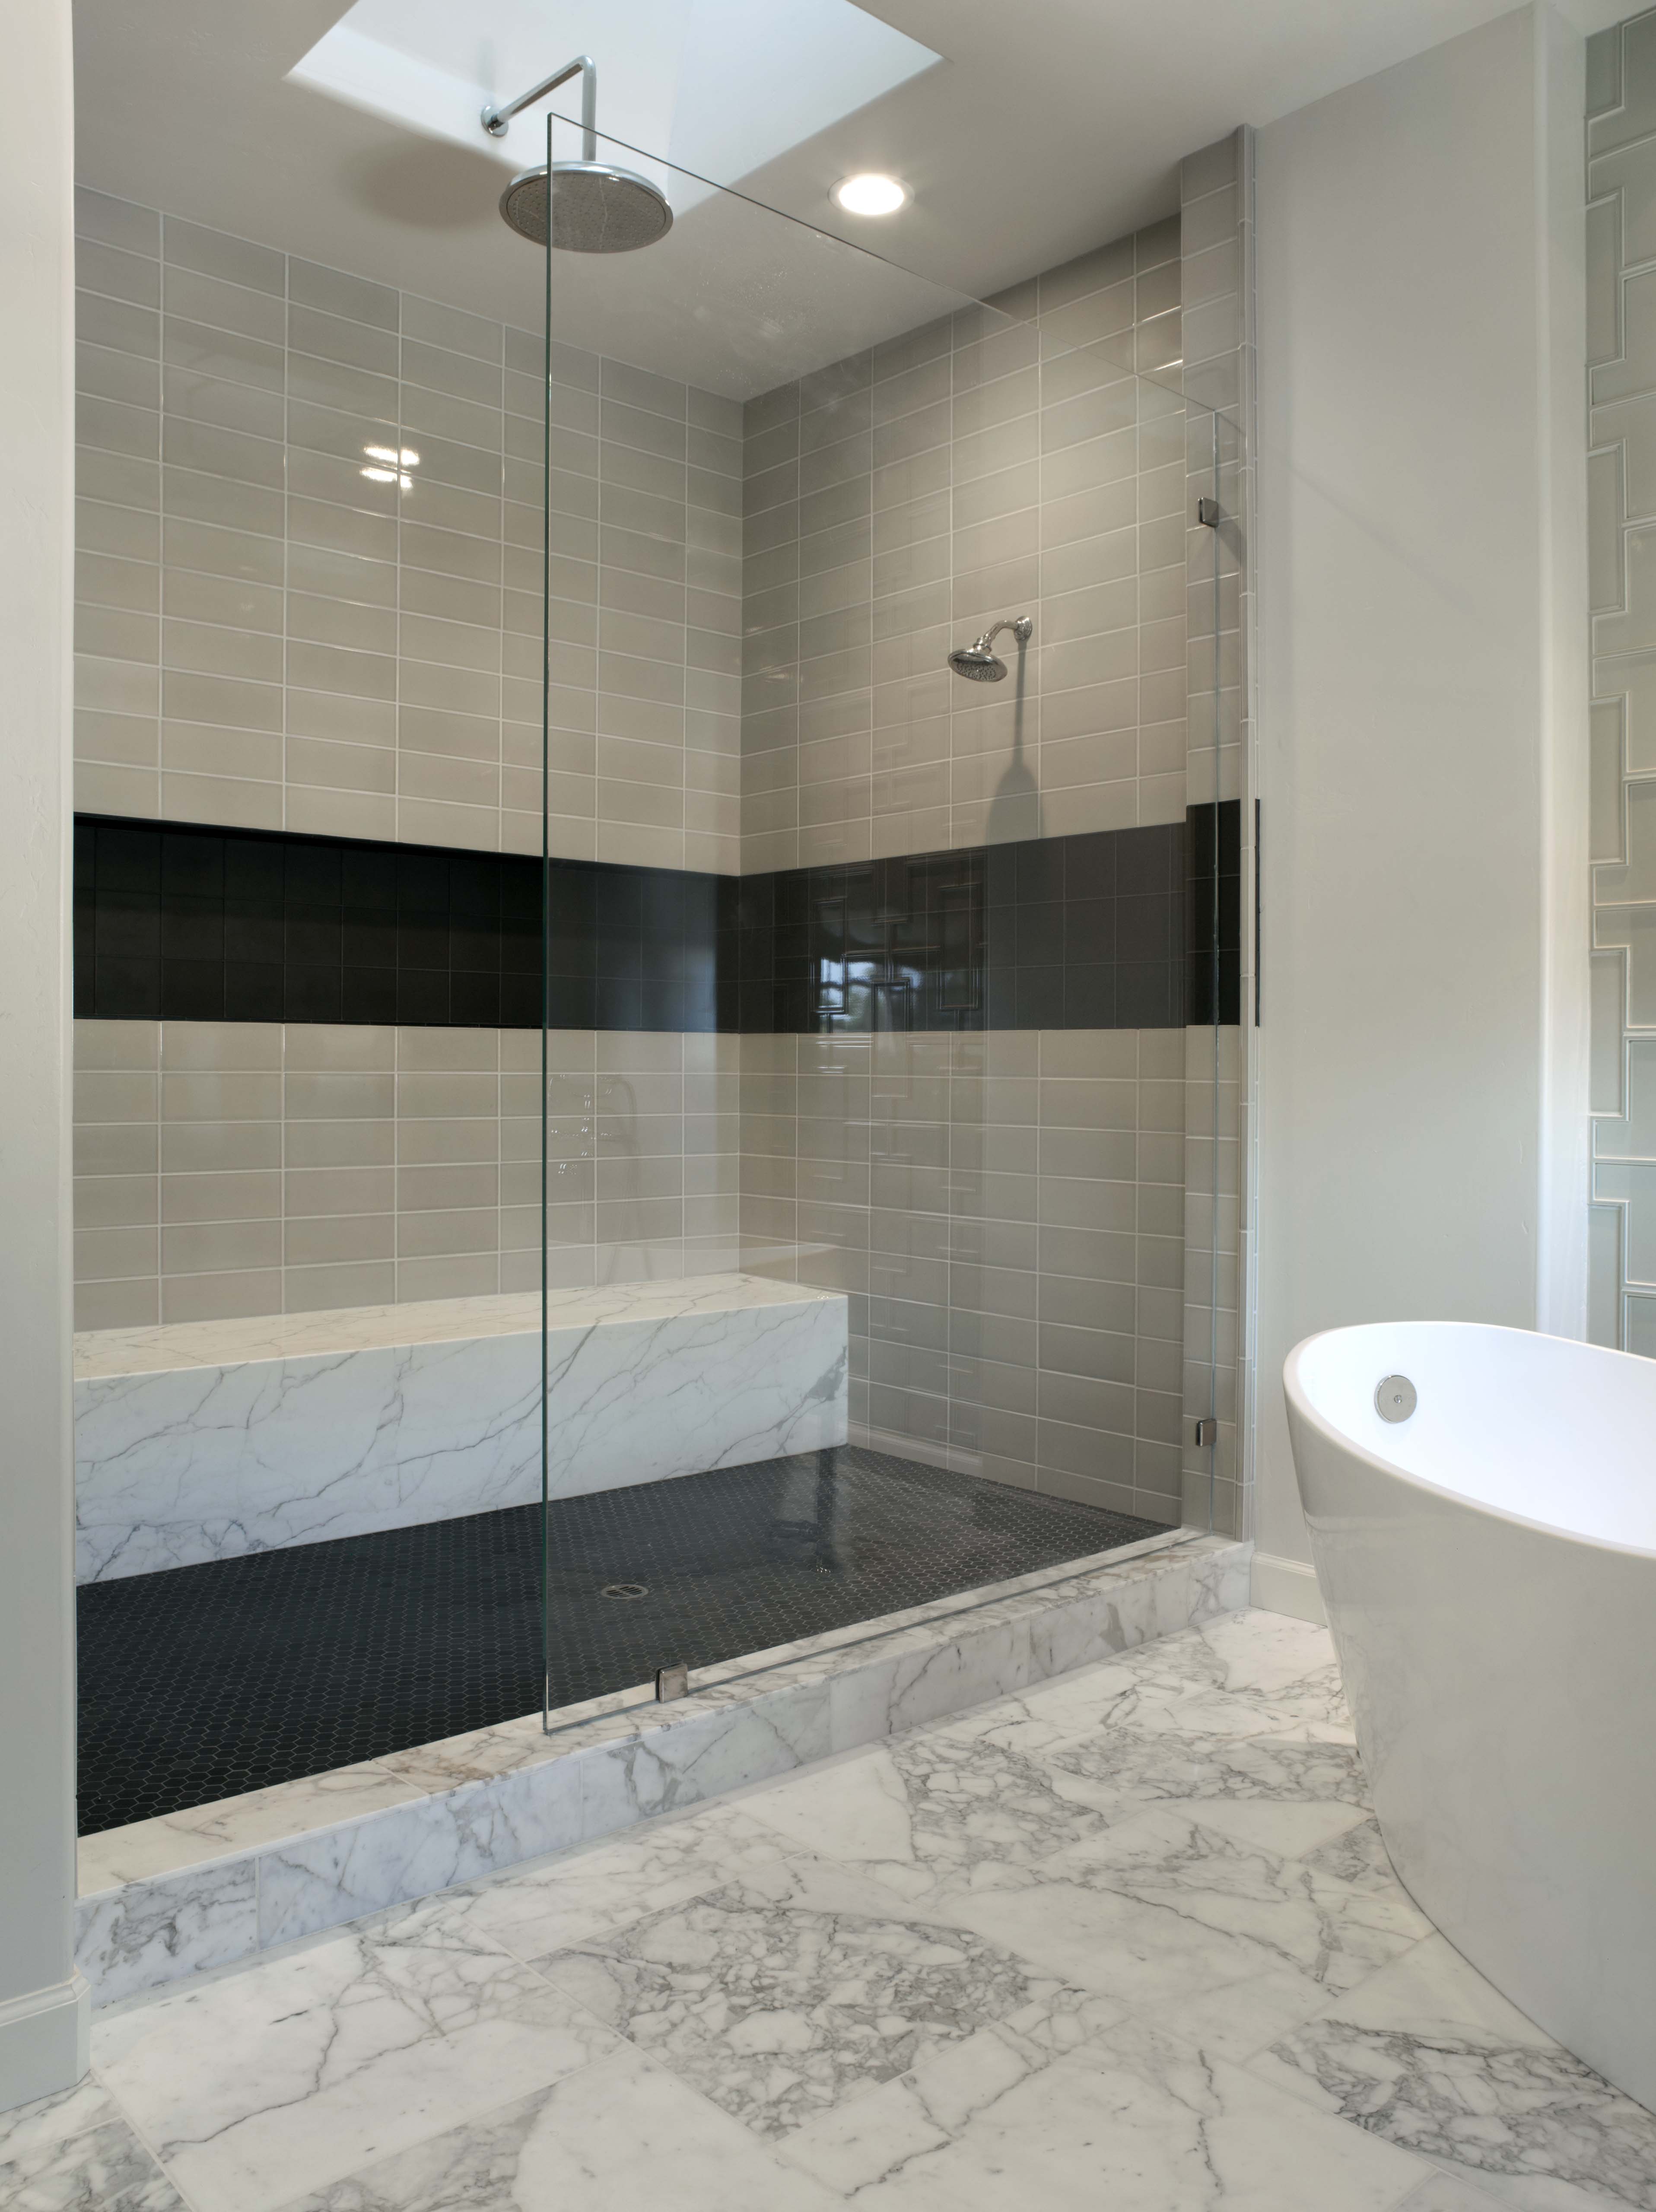 50 magnificent ultra modern bathroom tile ideas photos images